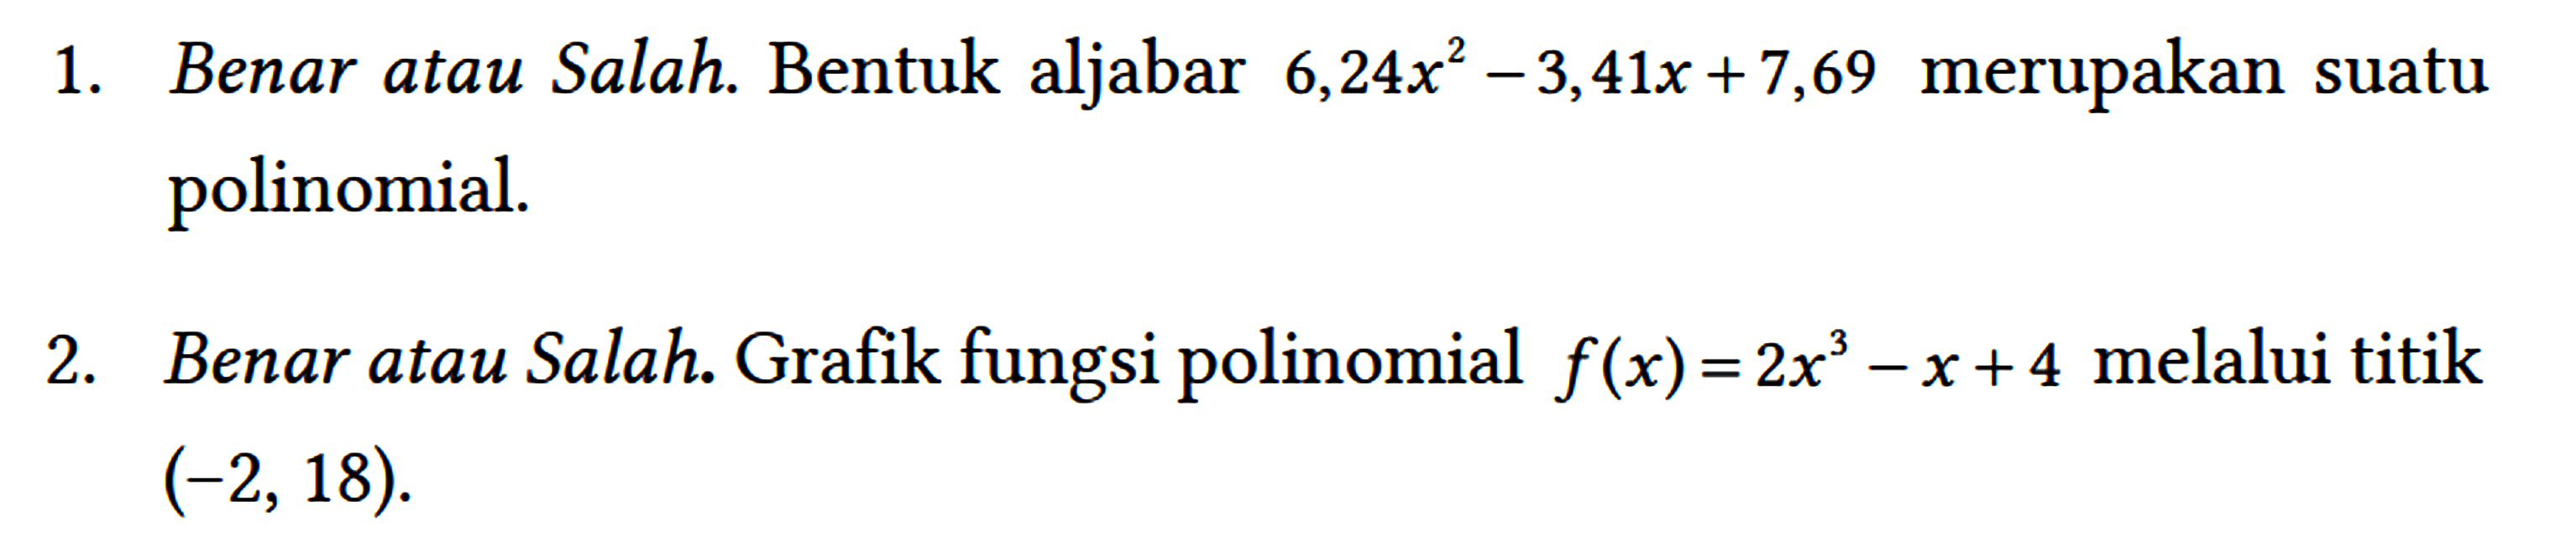 1. Benar atau Salah. Bentuk aljabar 6,24 x^(2)-3,41 x+7,69 merupakan suatu polinomial.
 2. Benar atau Salah. Grafik fungsi polinomial f(x)=2 x^(3)-x+4 melalui titik (-2,18)